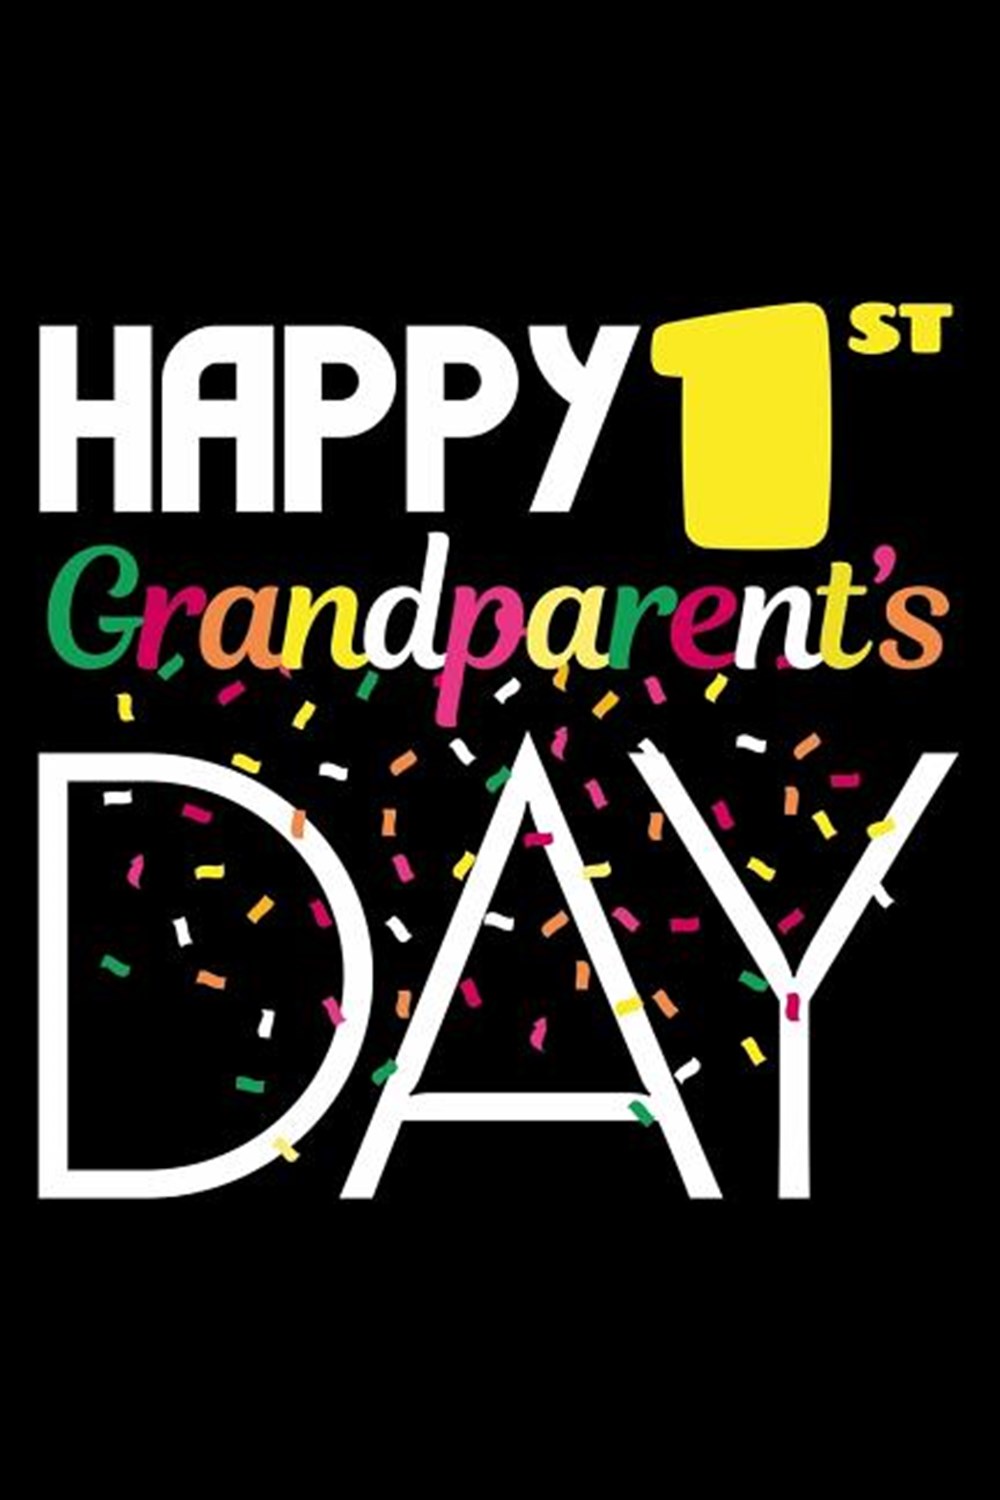 Happy 1St Grandparents Day Blank Paper Sketch Book - Artist Sketch Pad Journal for Sketching, Doodli